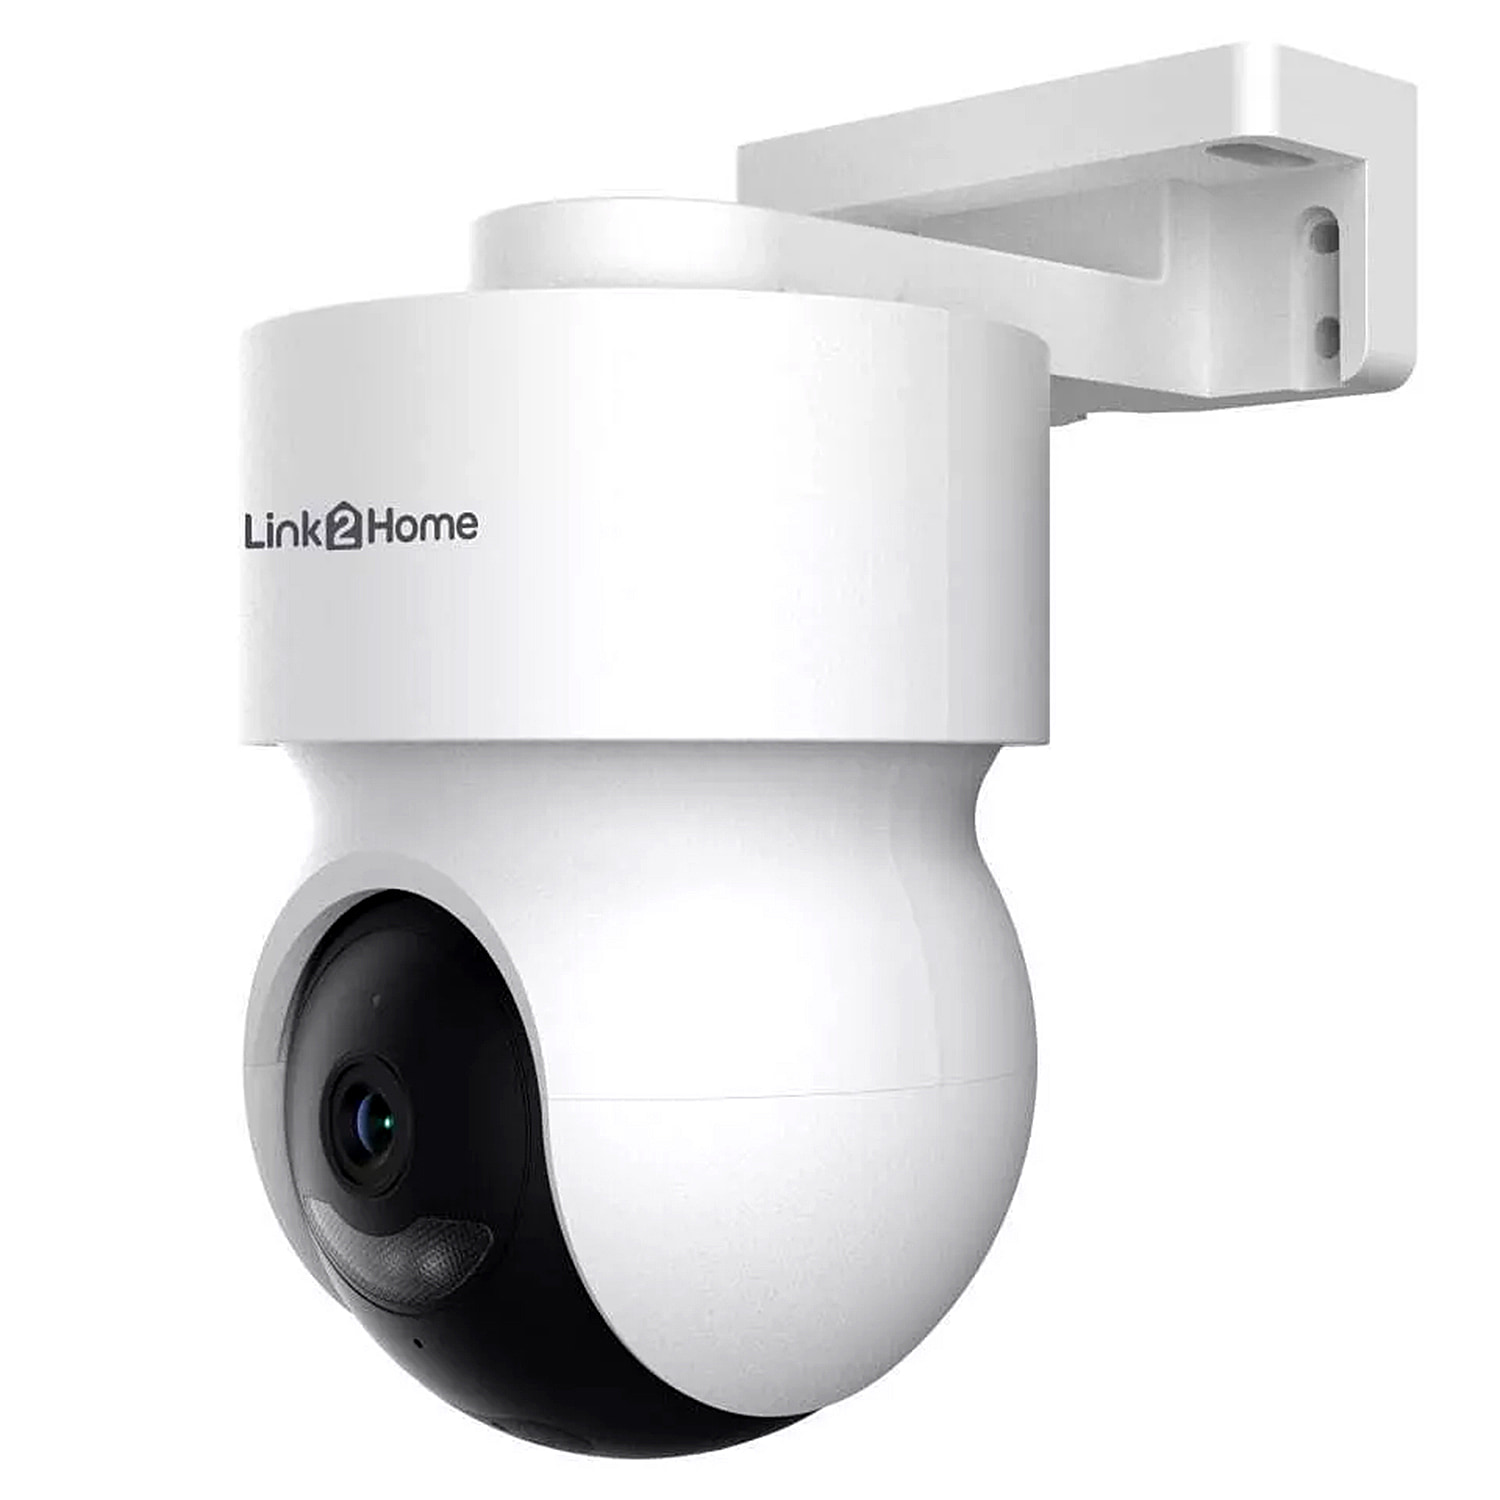 Link2Home - Outdoor Smart Security Camera